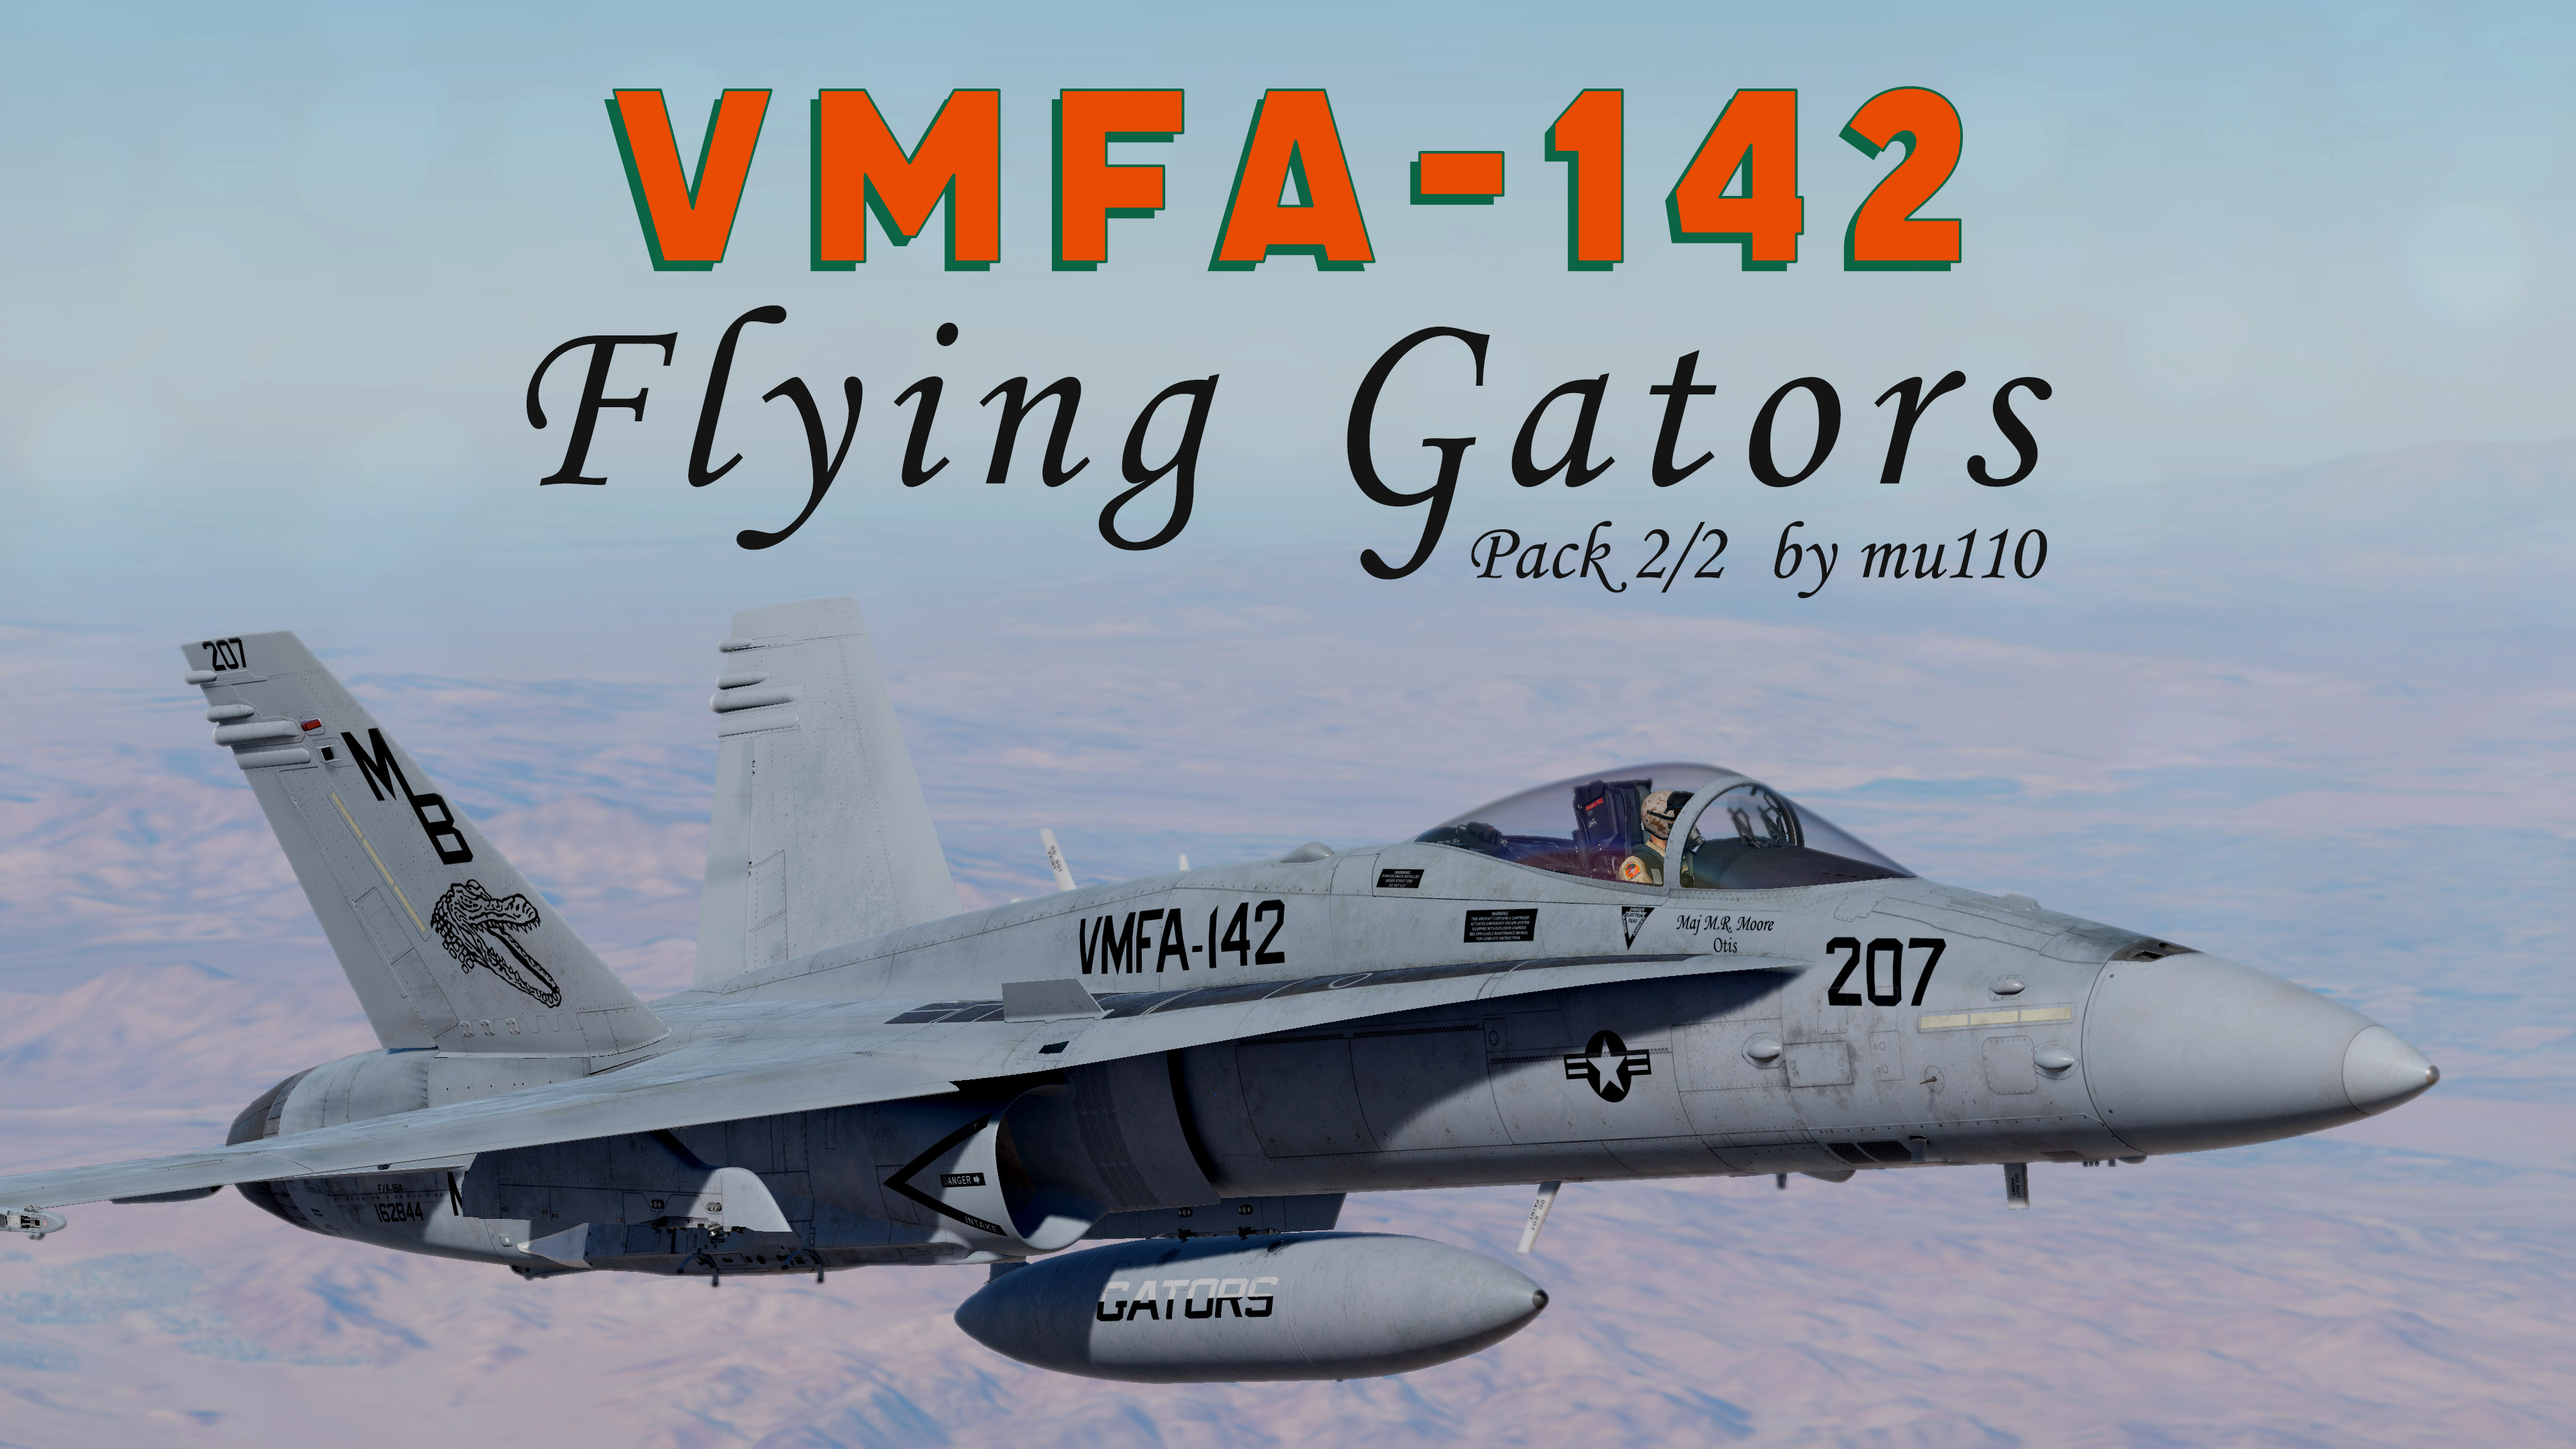 VMFA-142 "Flying Gators" Livery Pack 2 of 2!